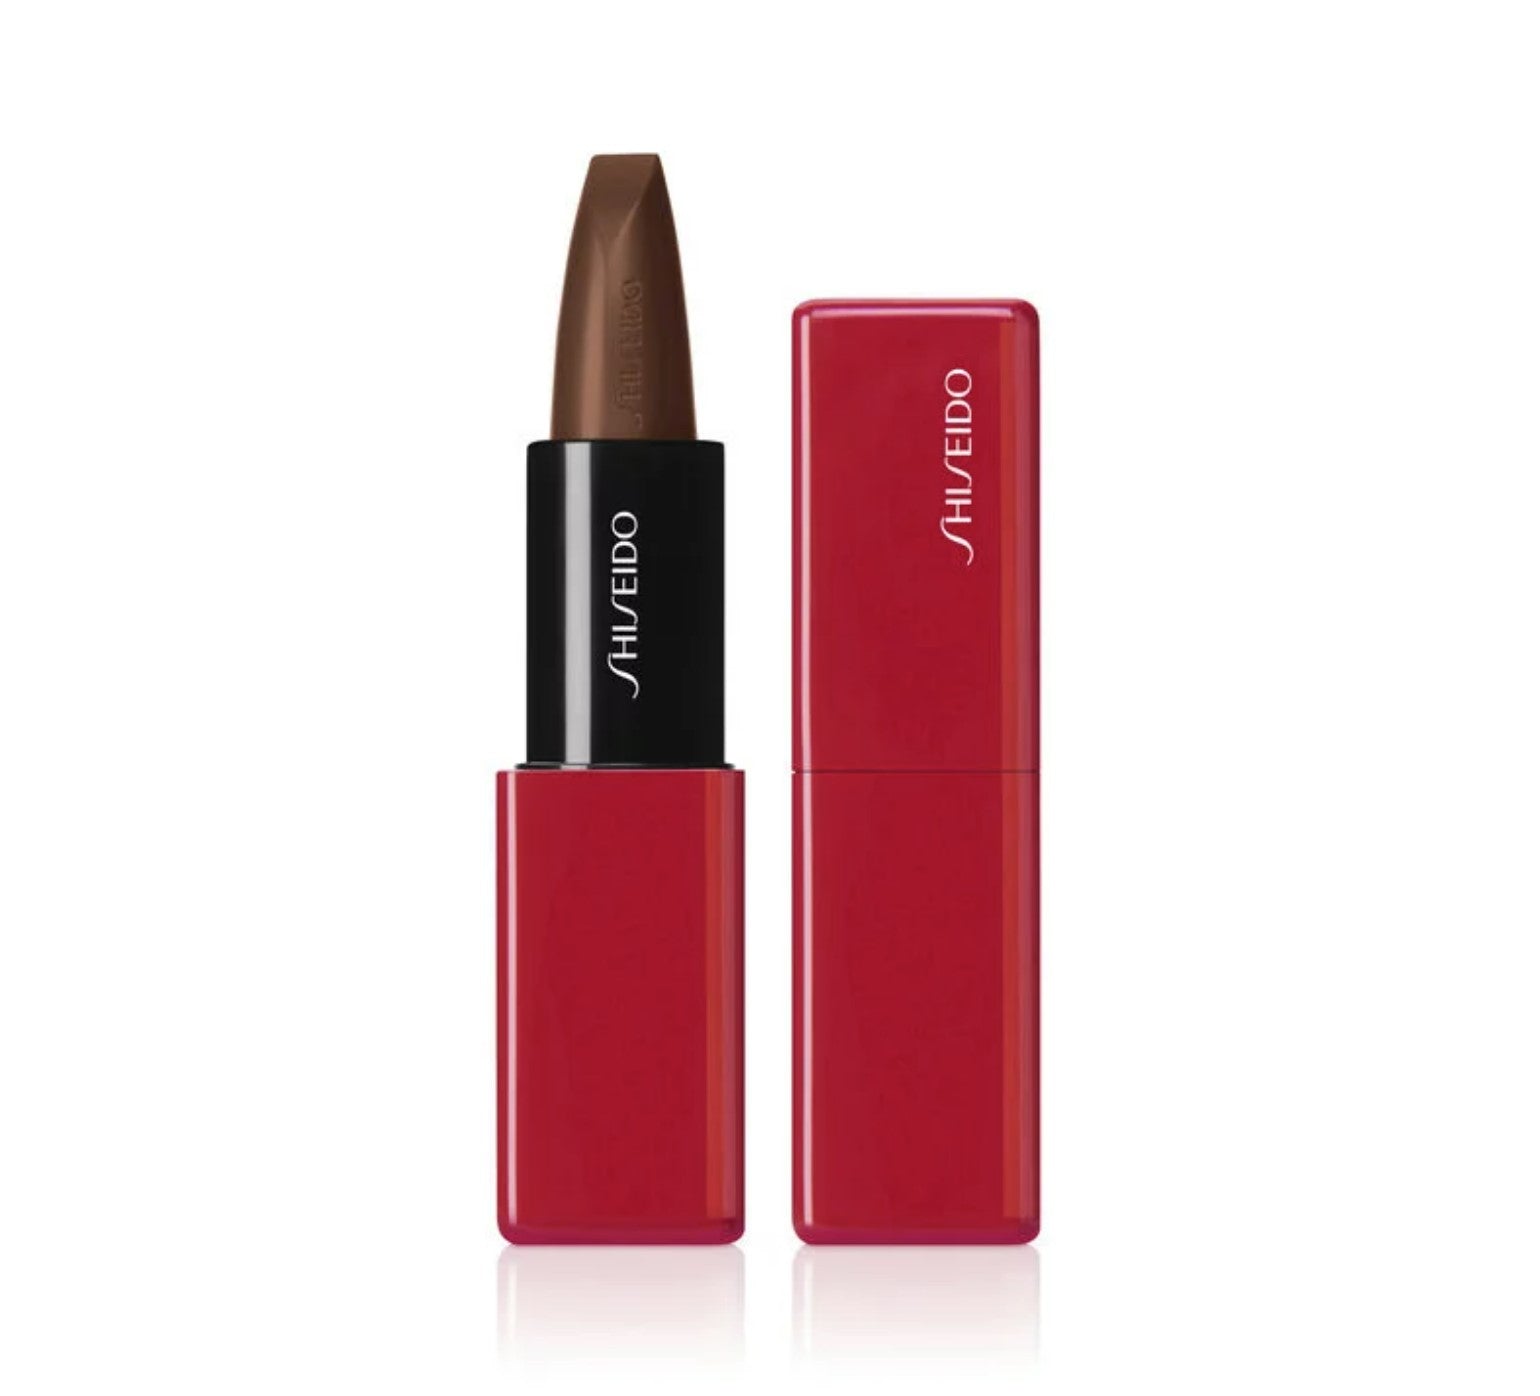 Shiseido TechnoSatin Long Lasting & Hydrating Gel Lipstick energy surge